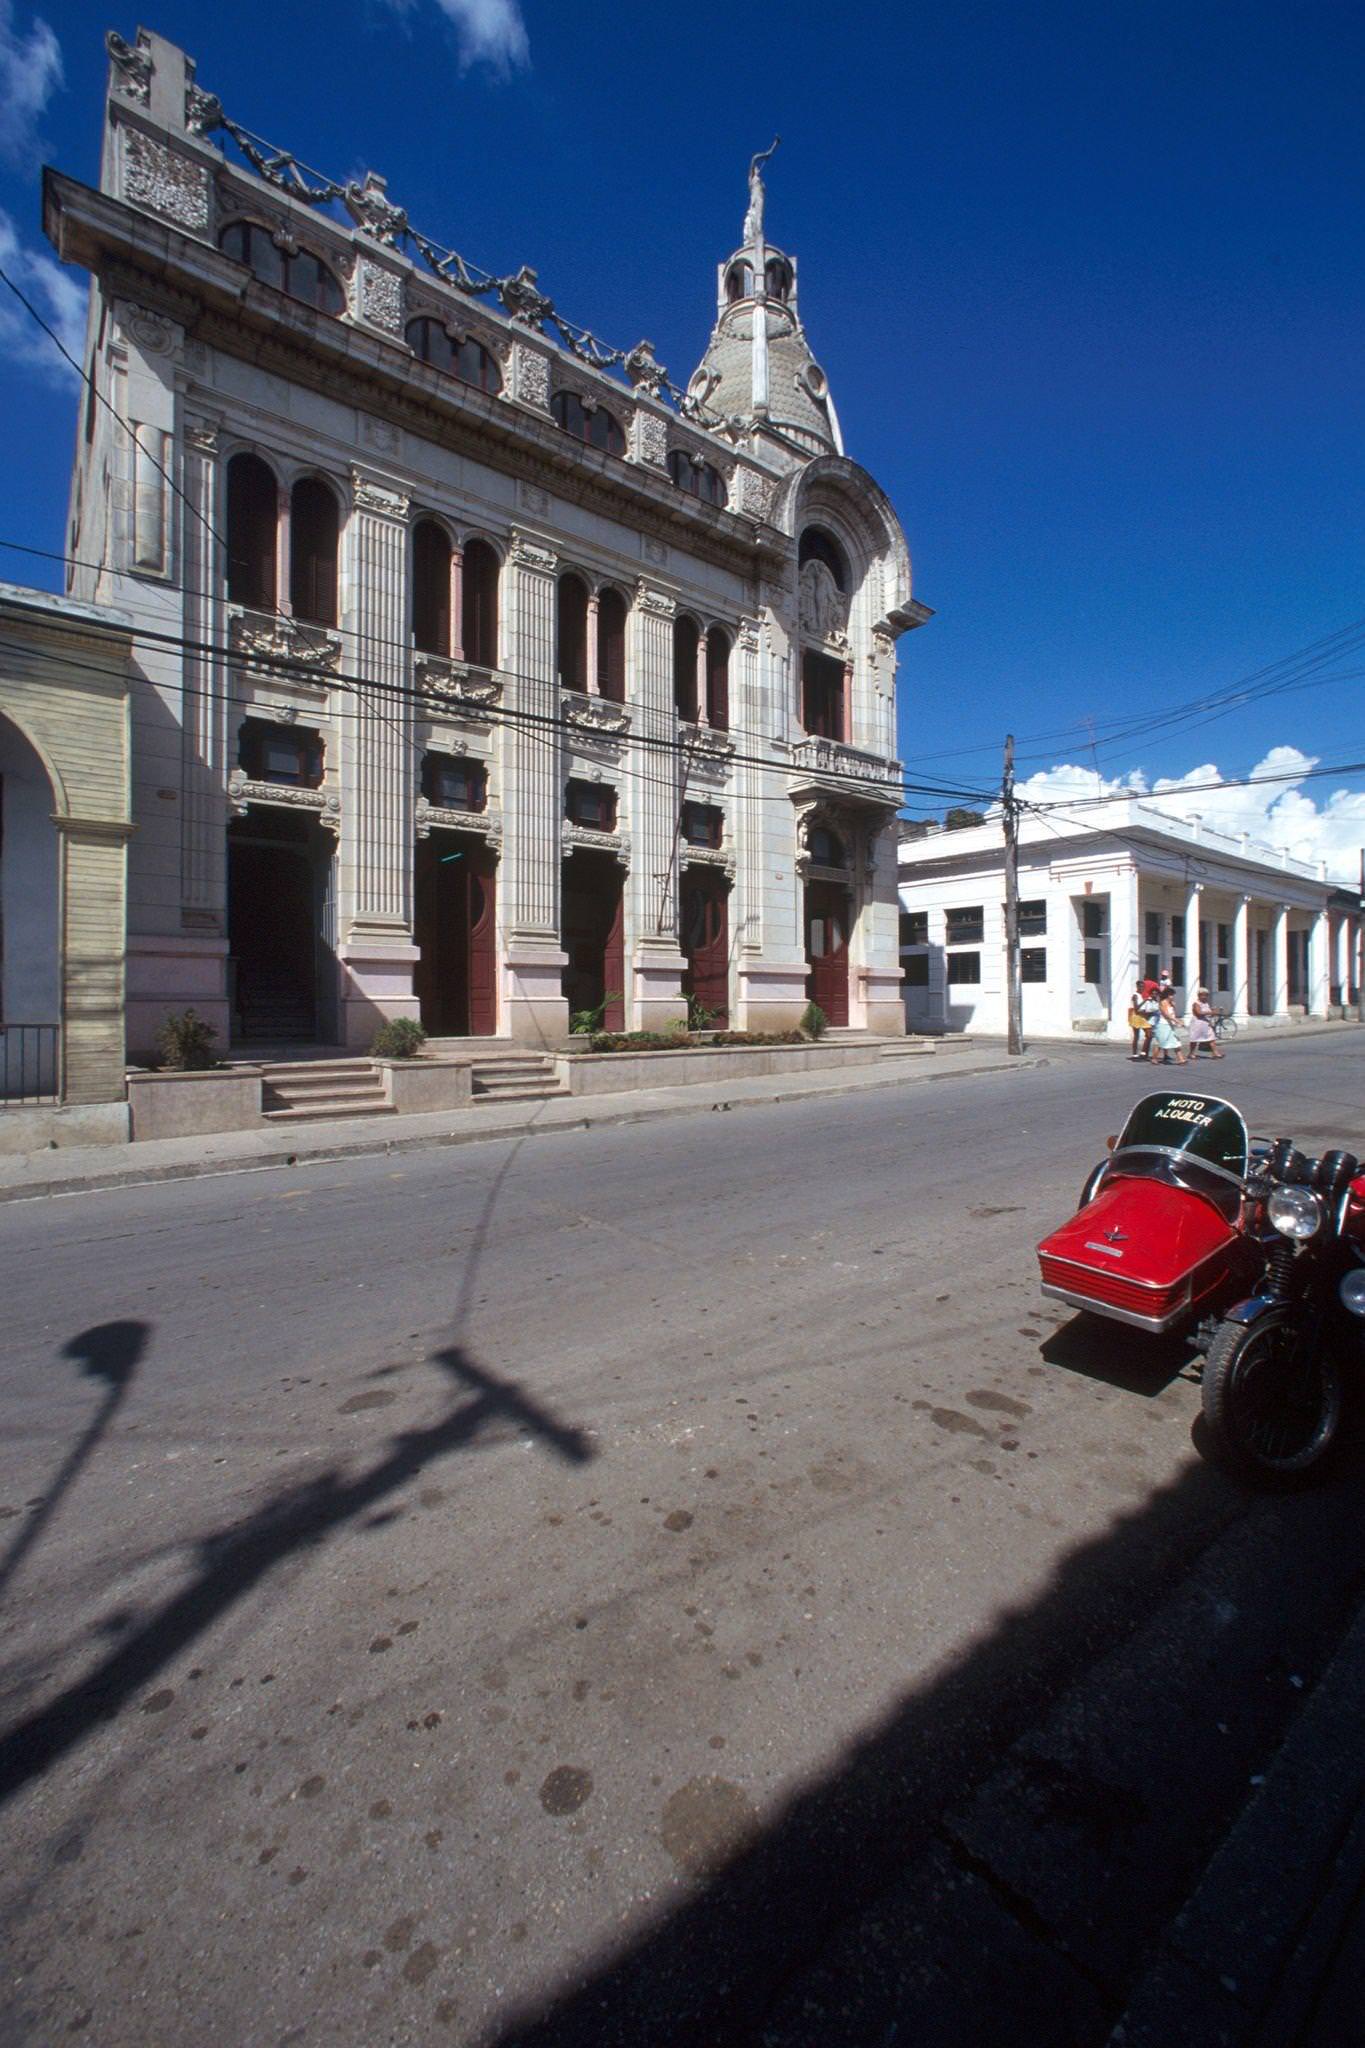 Façade of a building in Guantanamo, Cuba, 1990.